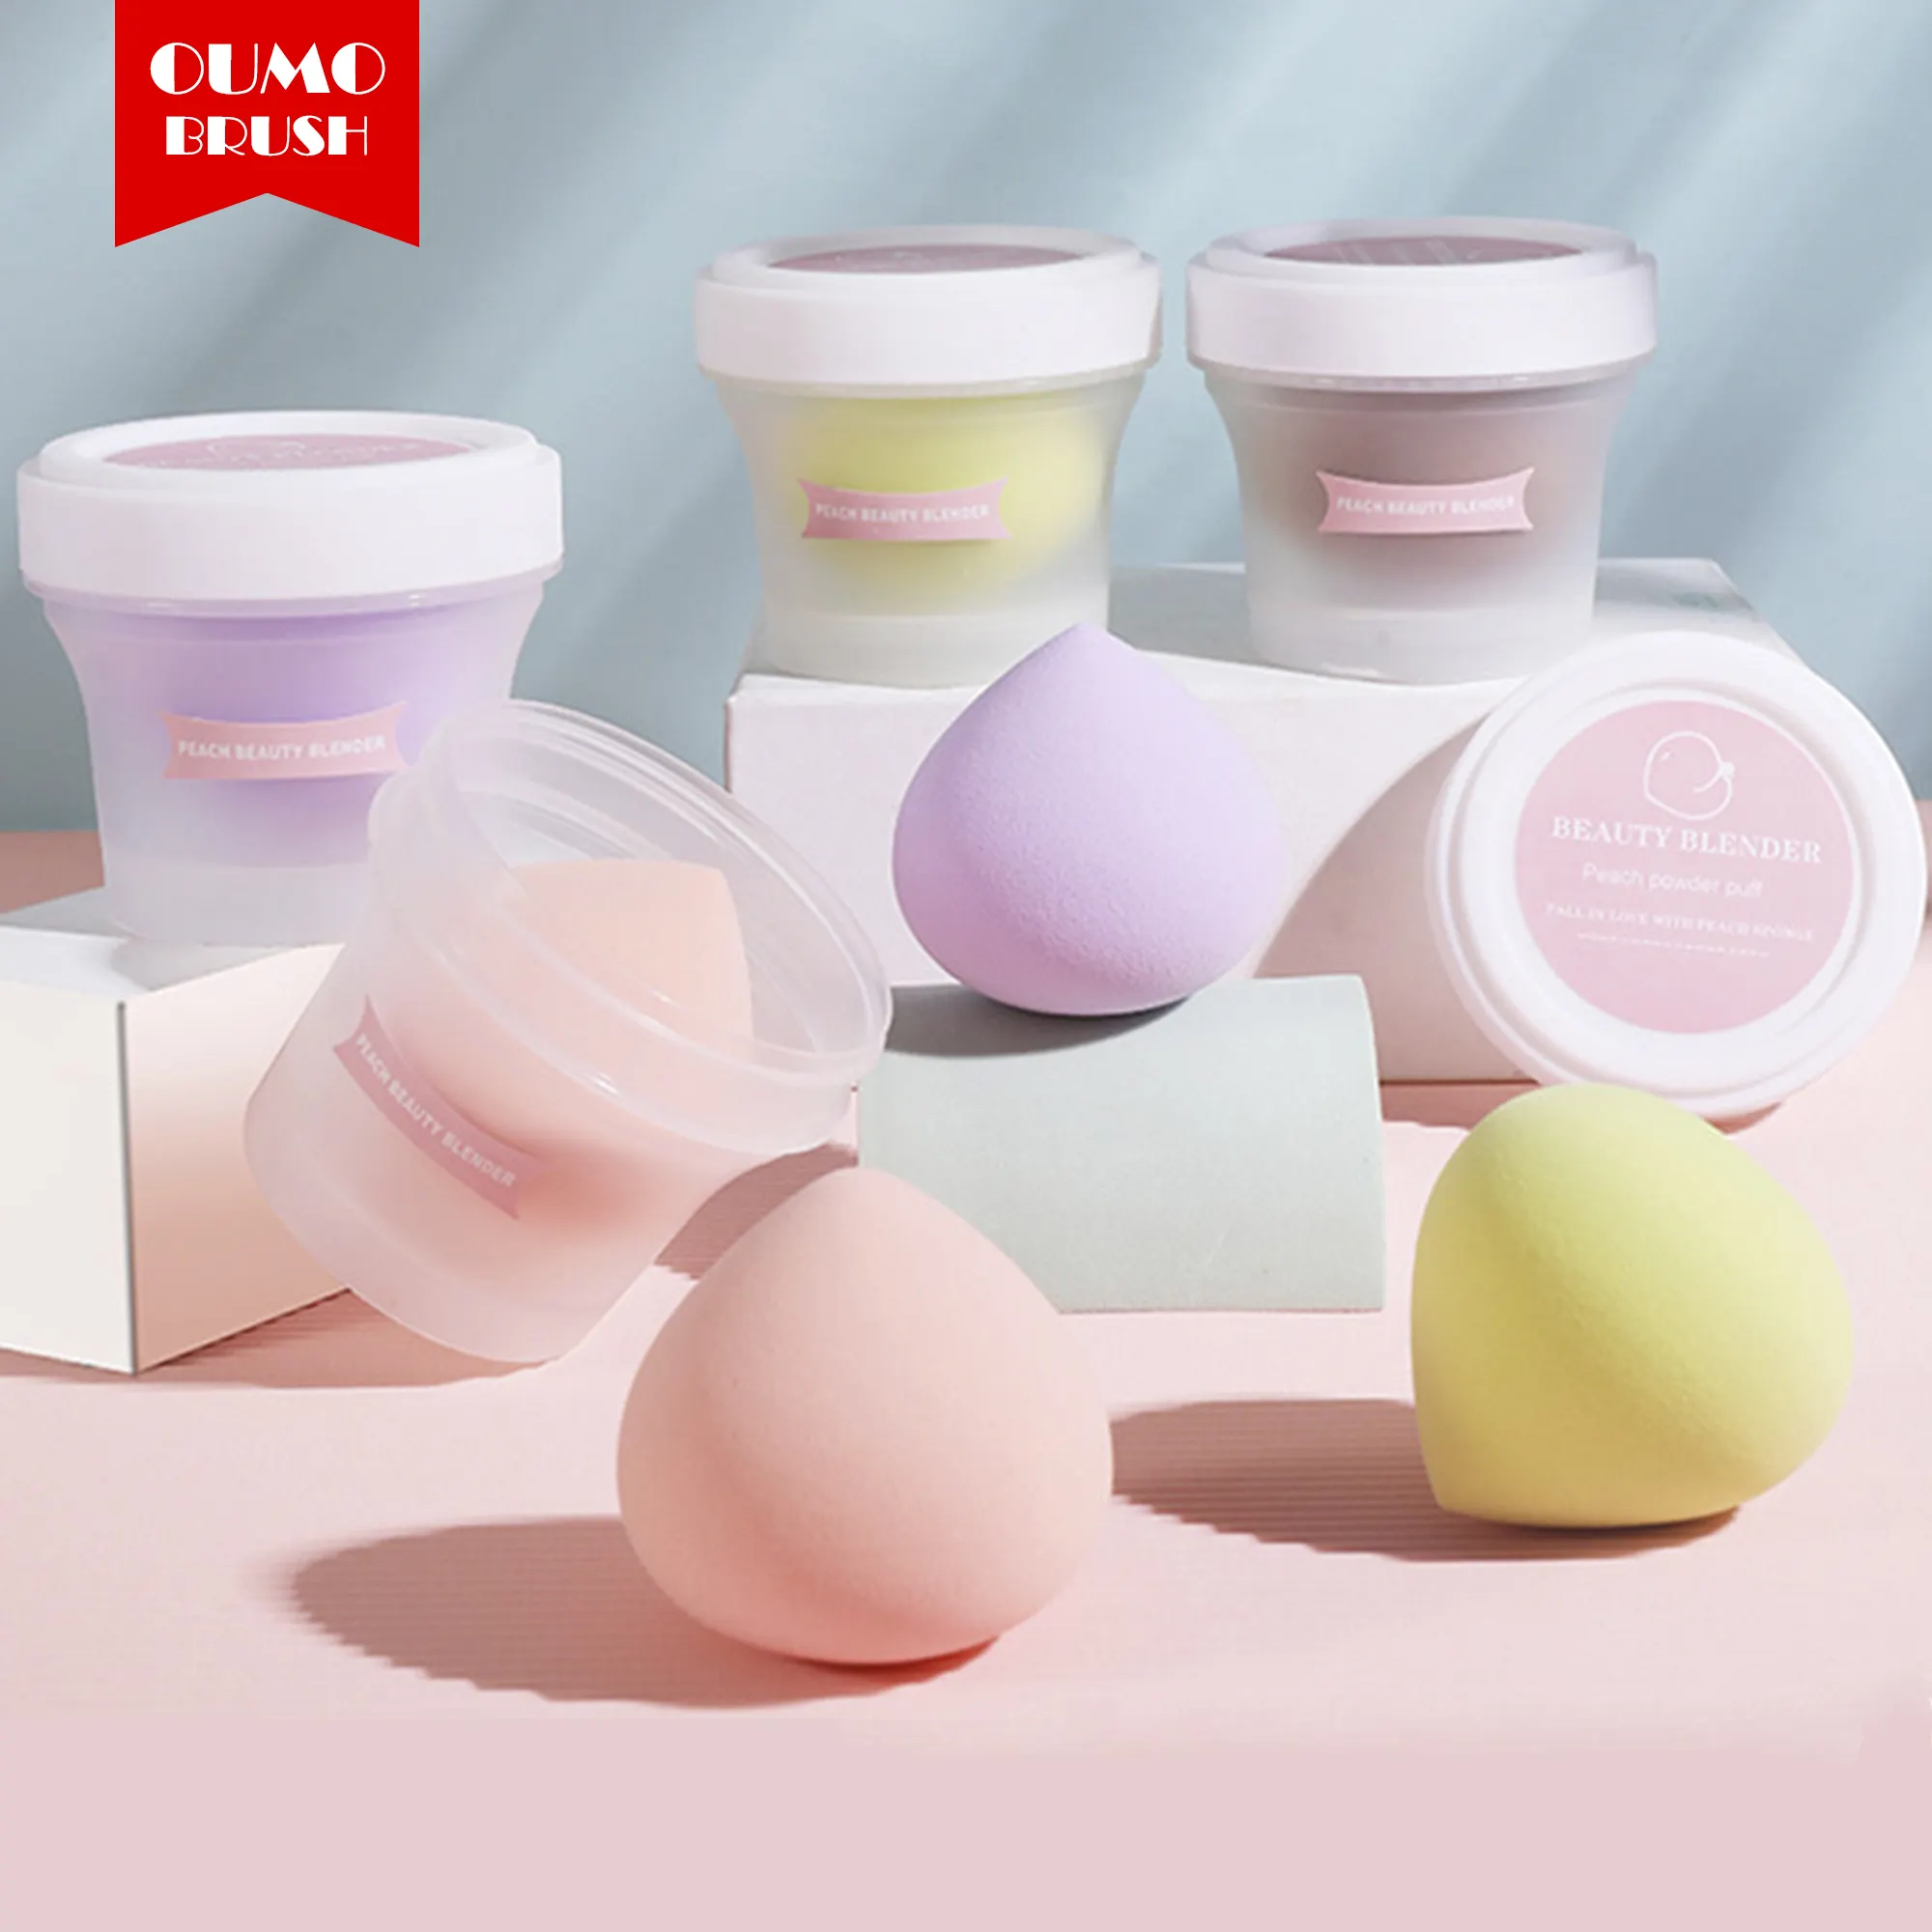 OUMO--fruit peach beauty eggs makeup sponge with case latex free material very soft beauty makeup the egg custom logo